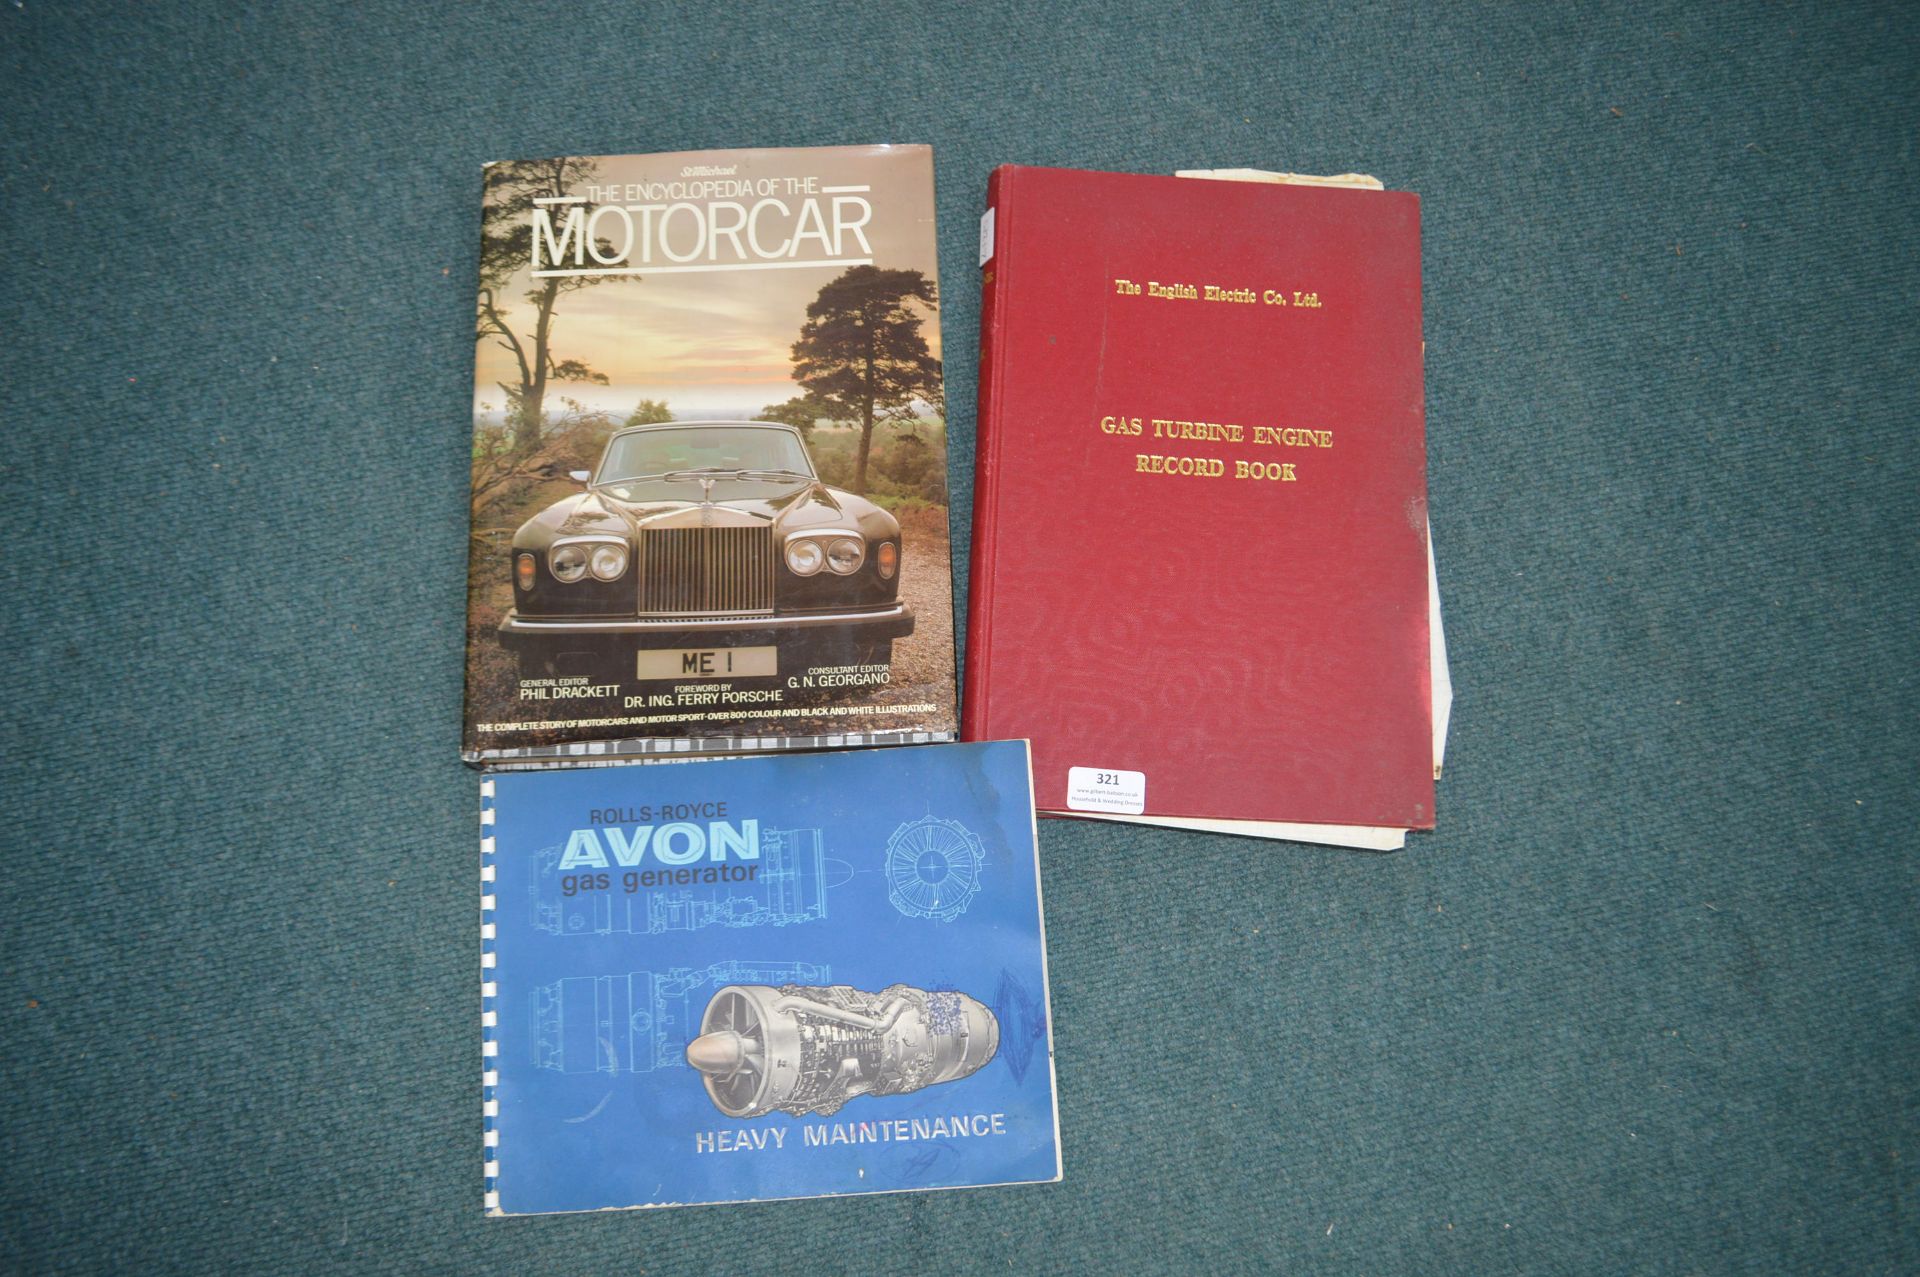 Vintage Gas Turbine Books by Rolls Royce etc.